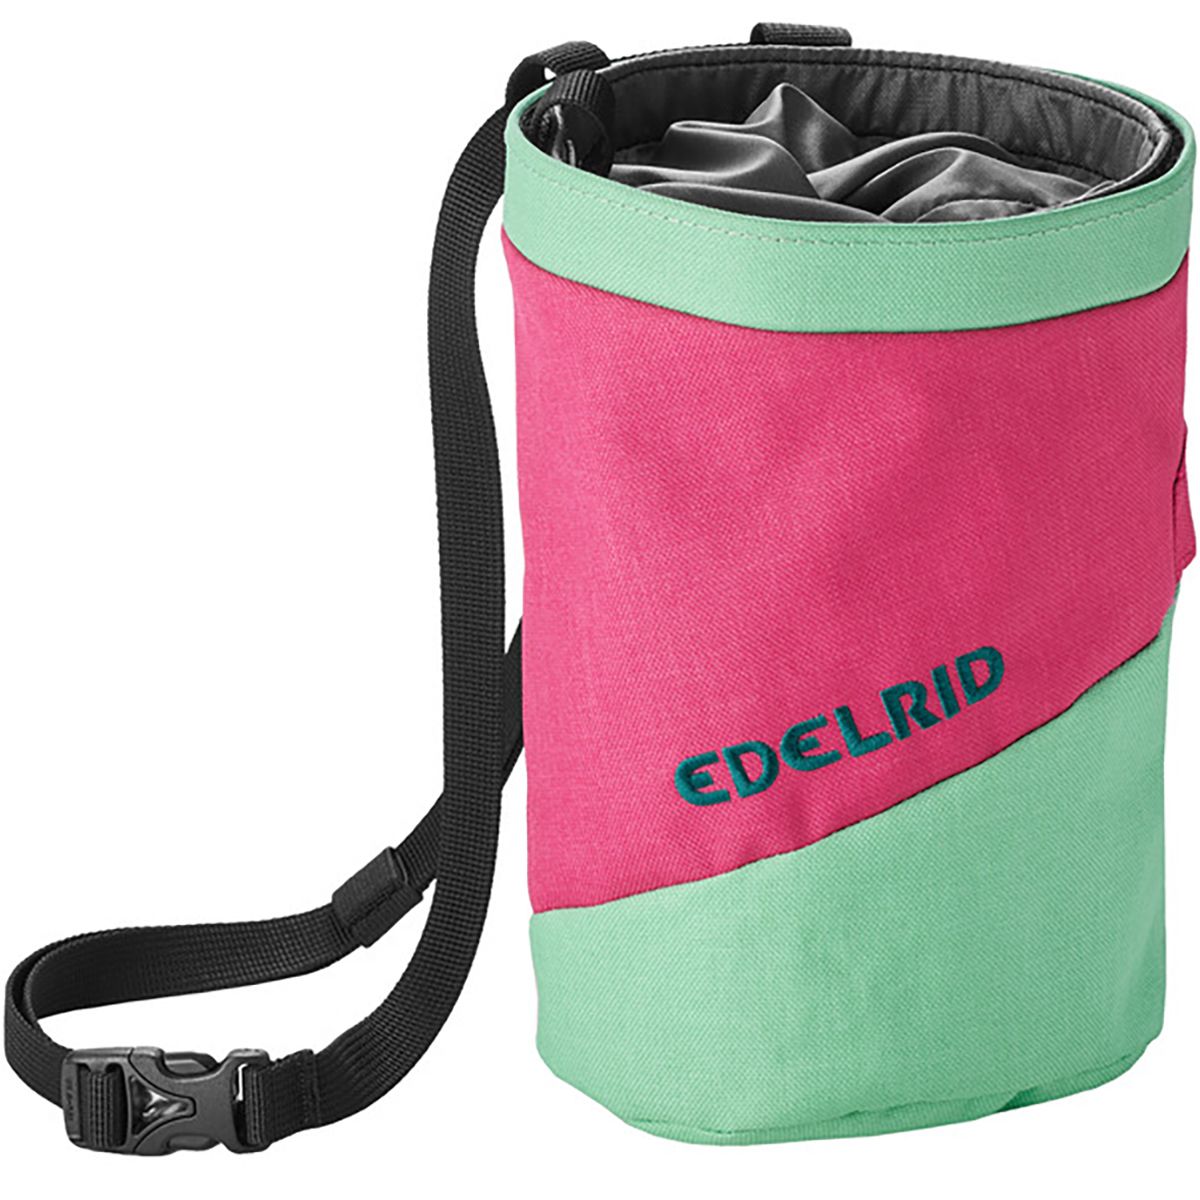 Edelrid Splitter Twist Chalk Bag